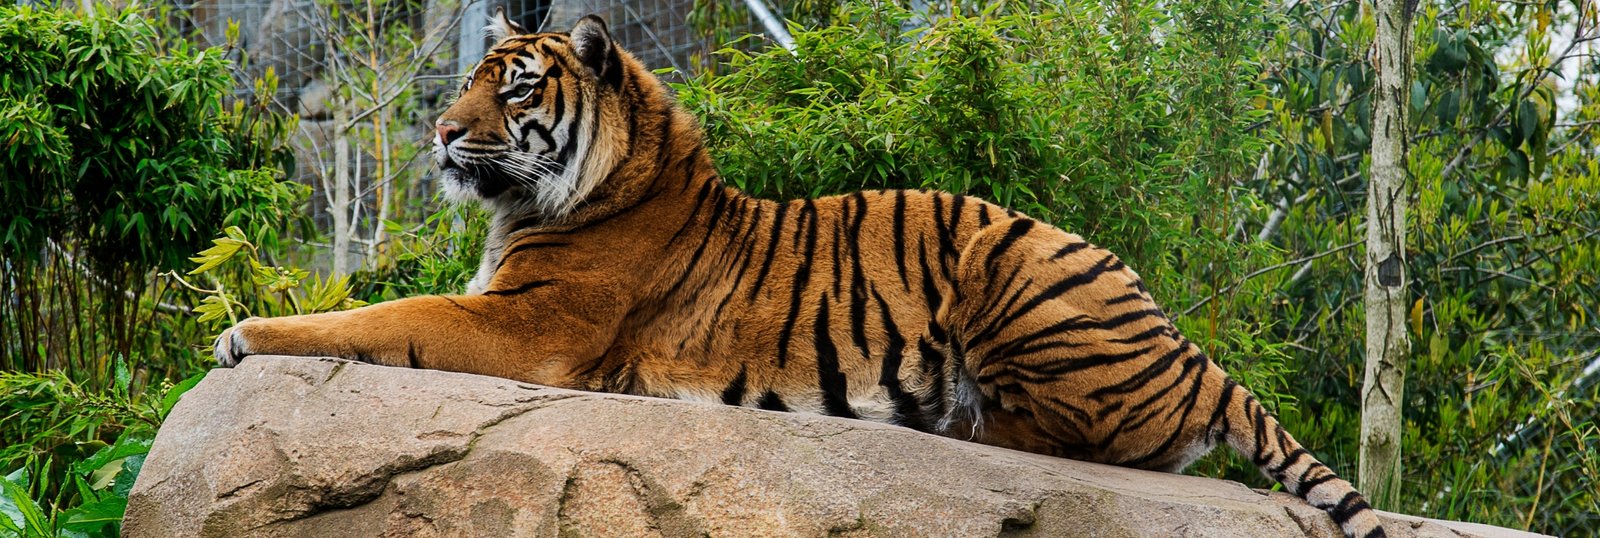 Tiger Safari in india